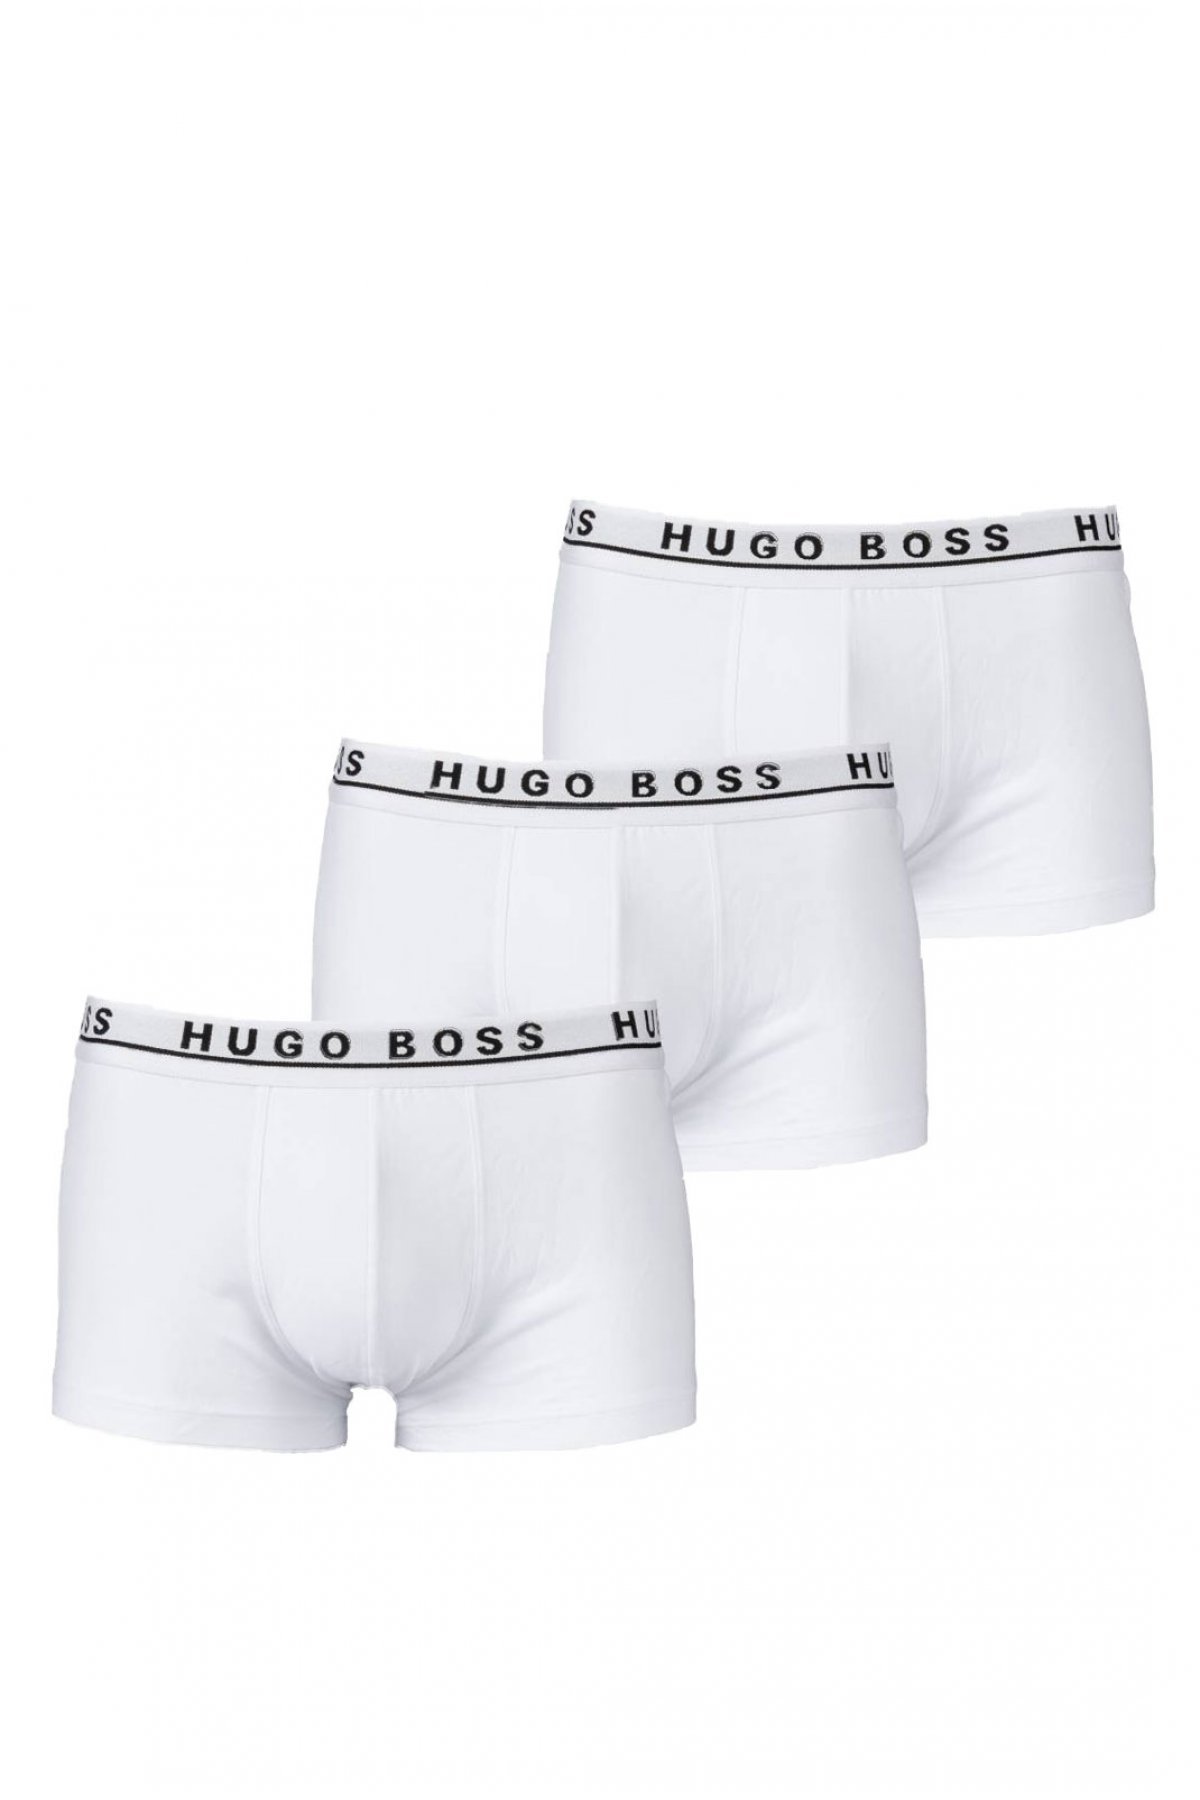 Hugo Boss 50325403 Boxer 3 Pack bílé